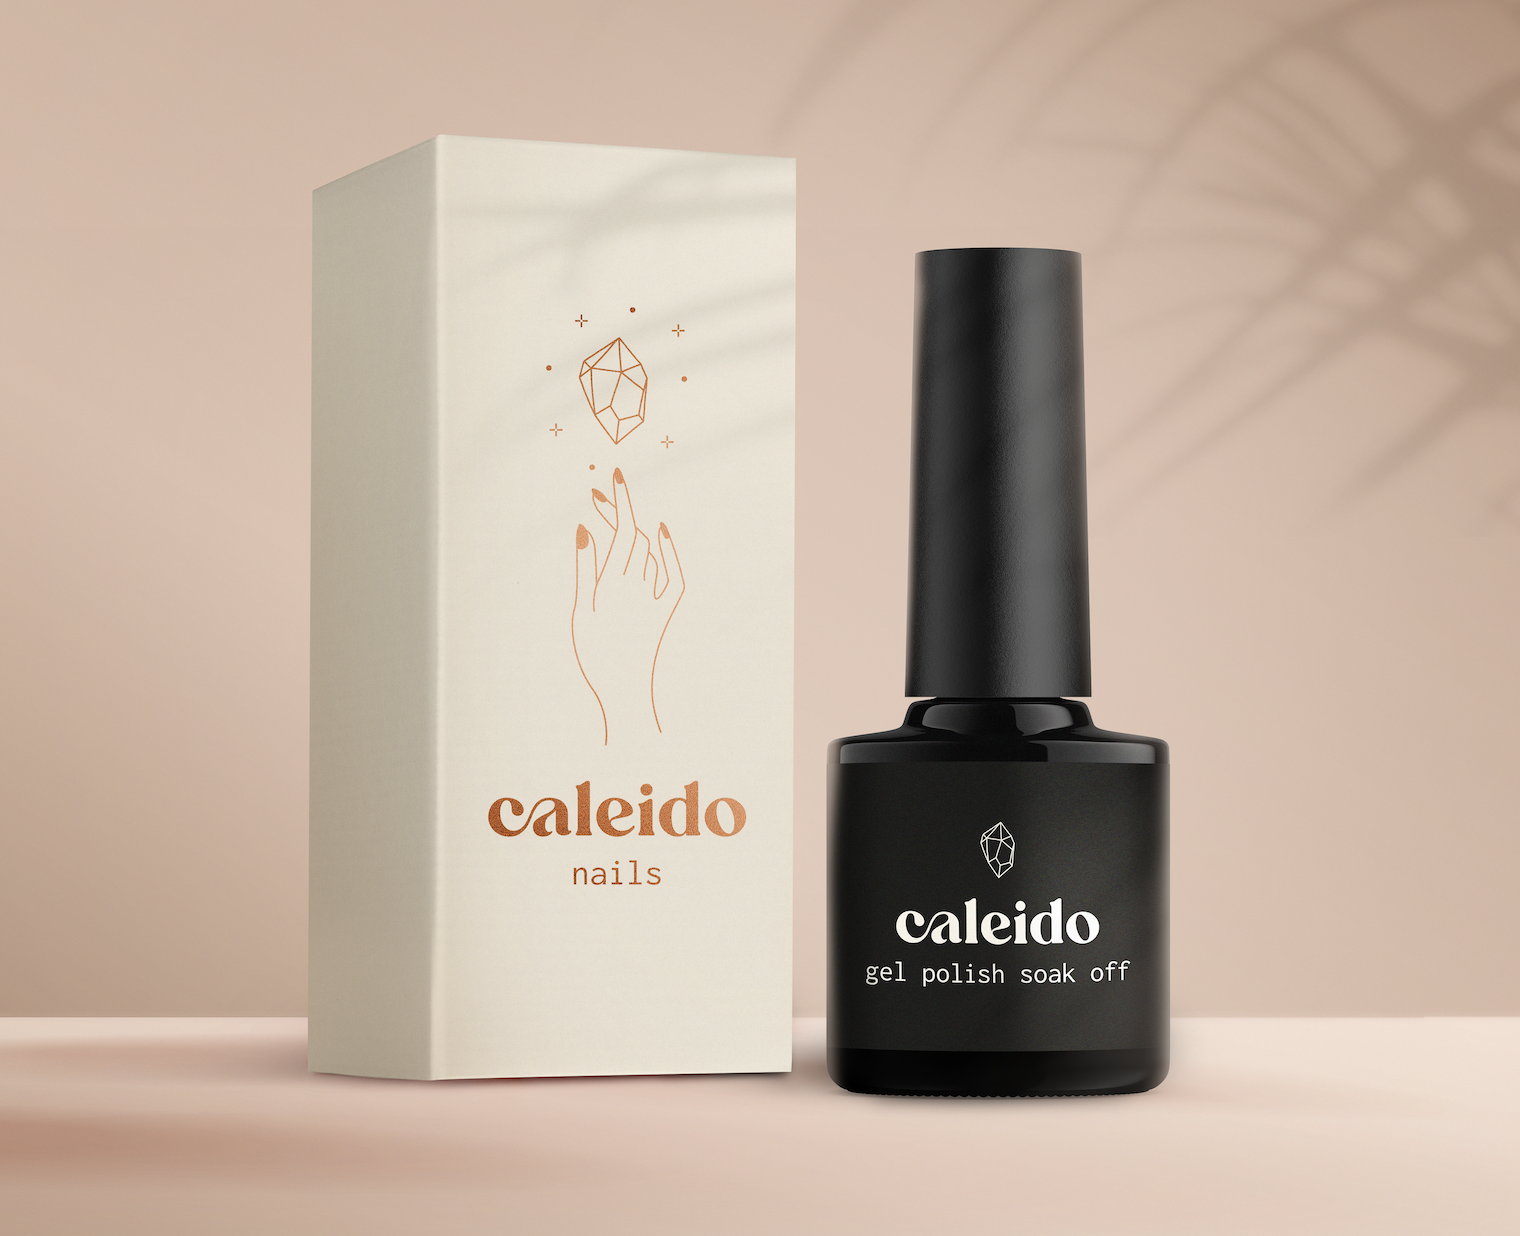 Caleido Nails - Digital Identity